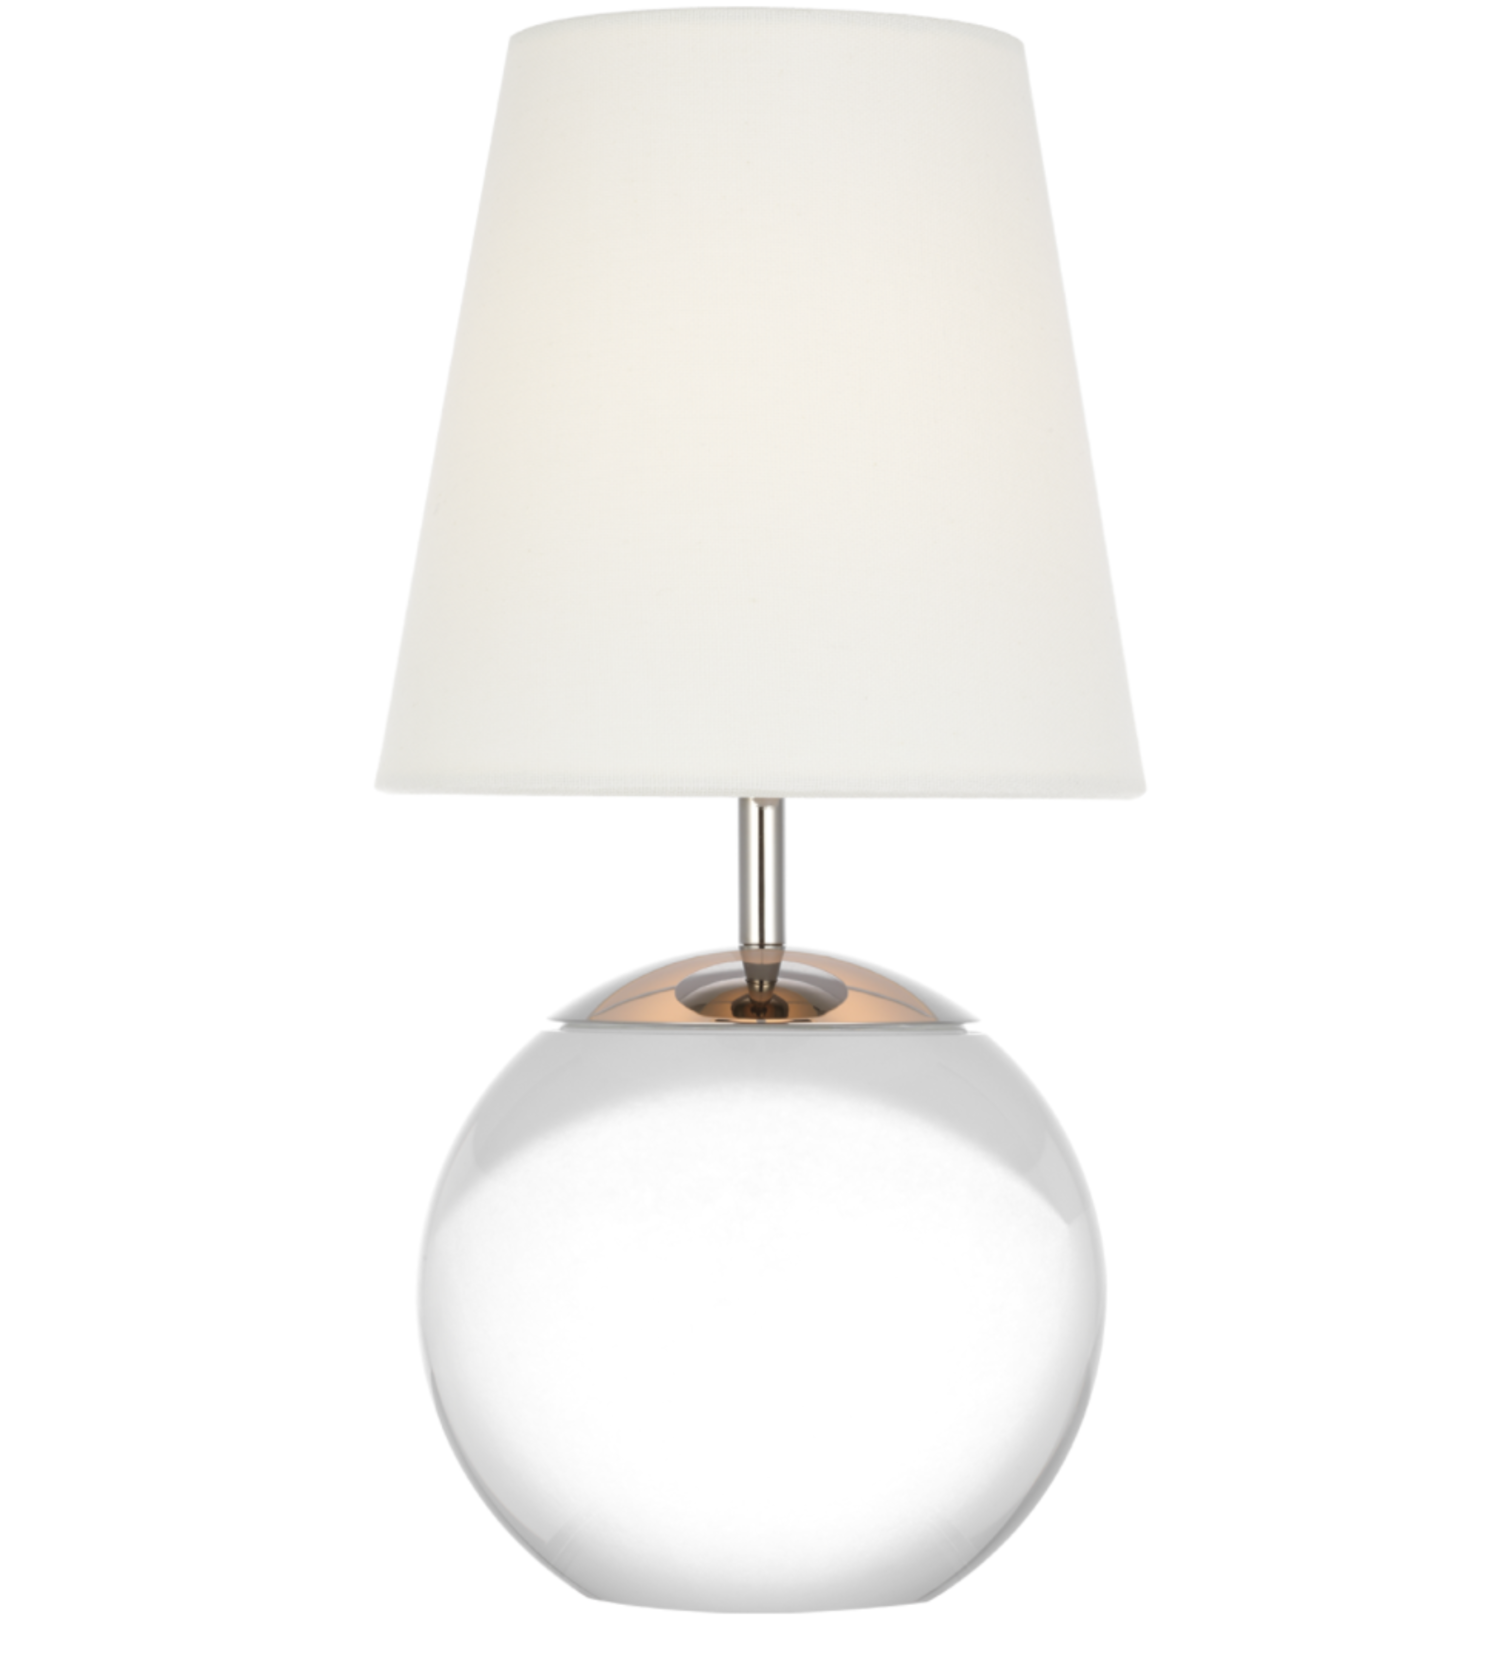 Visual Comfort Tiny Terri Table Lamp in Brass, Accent Lamp 10.25